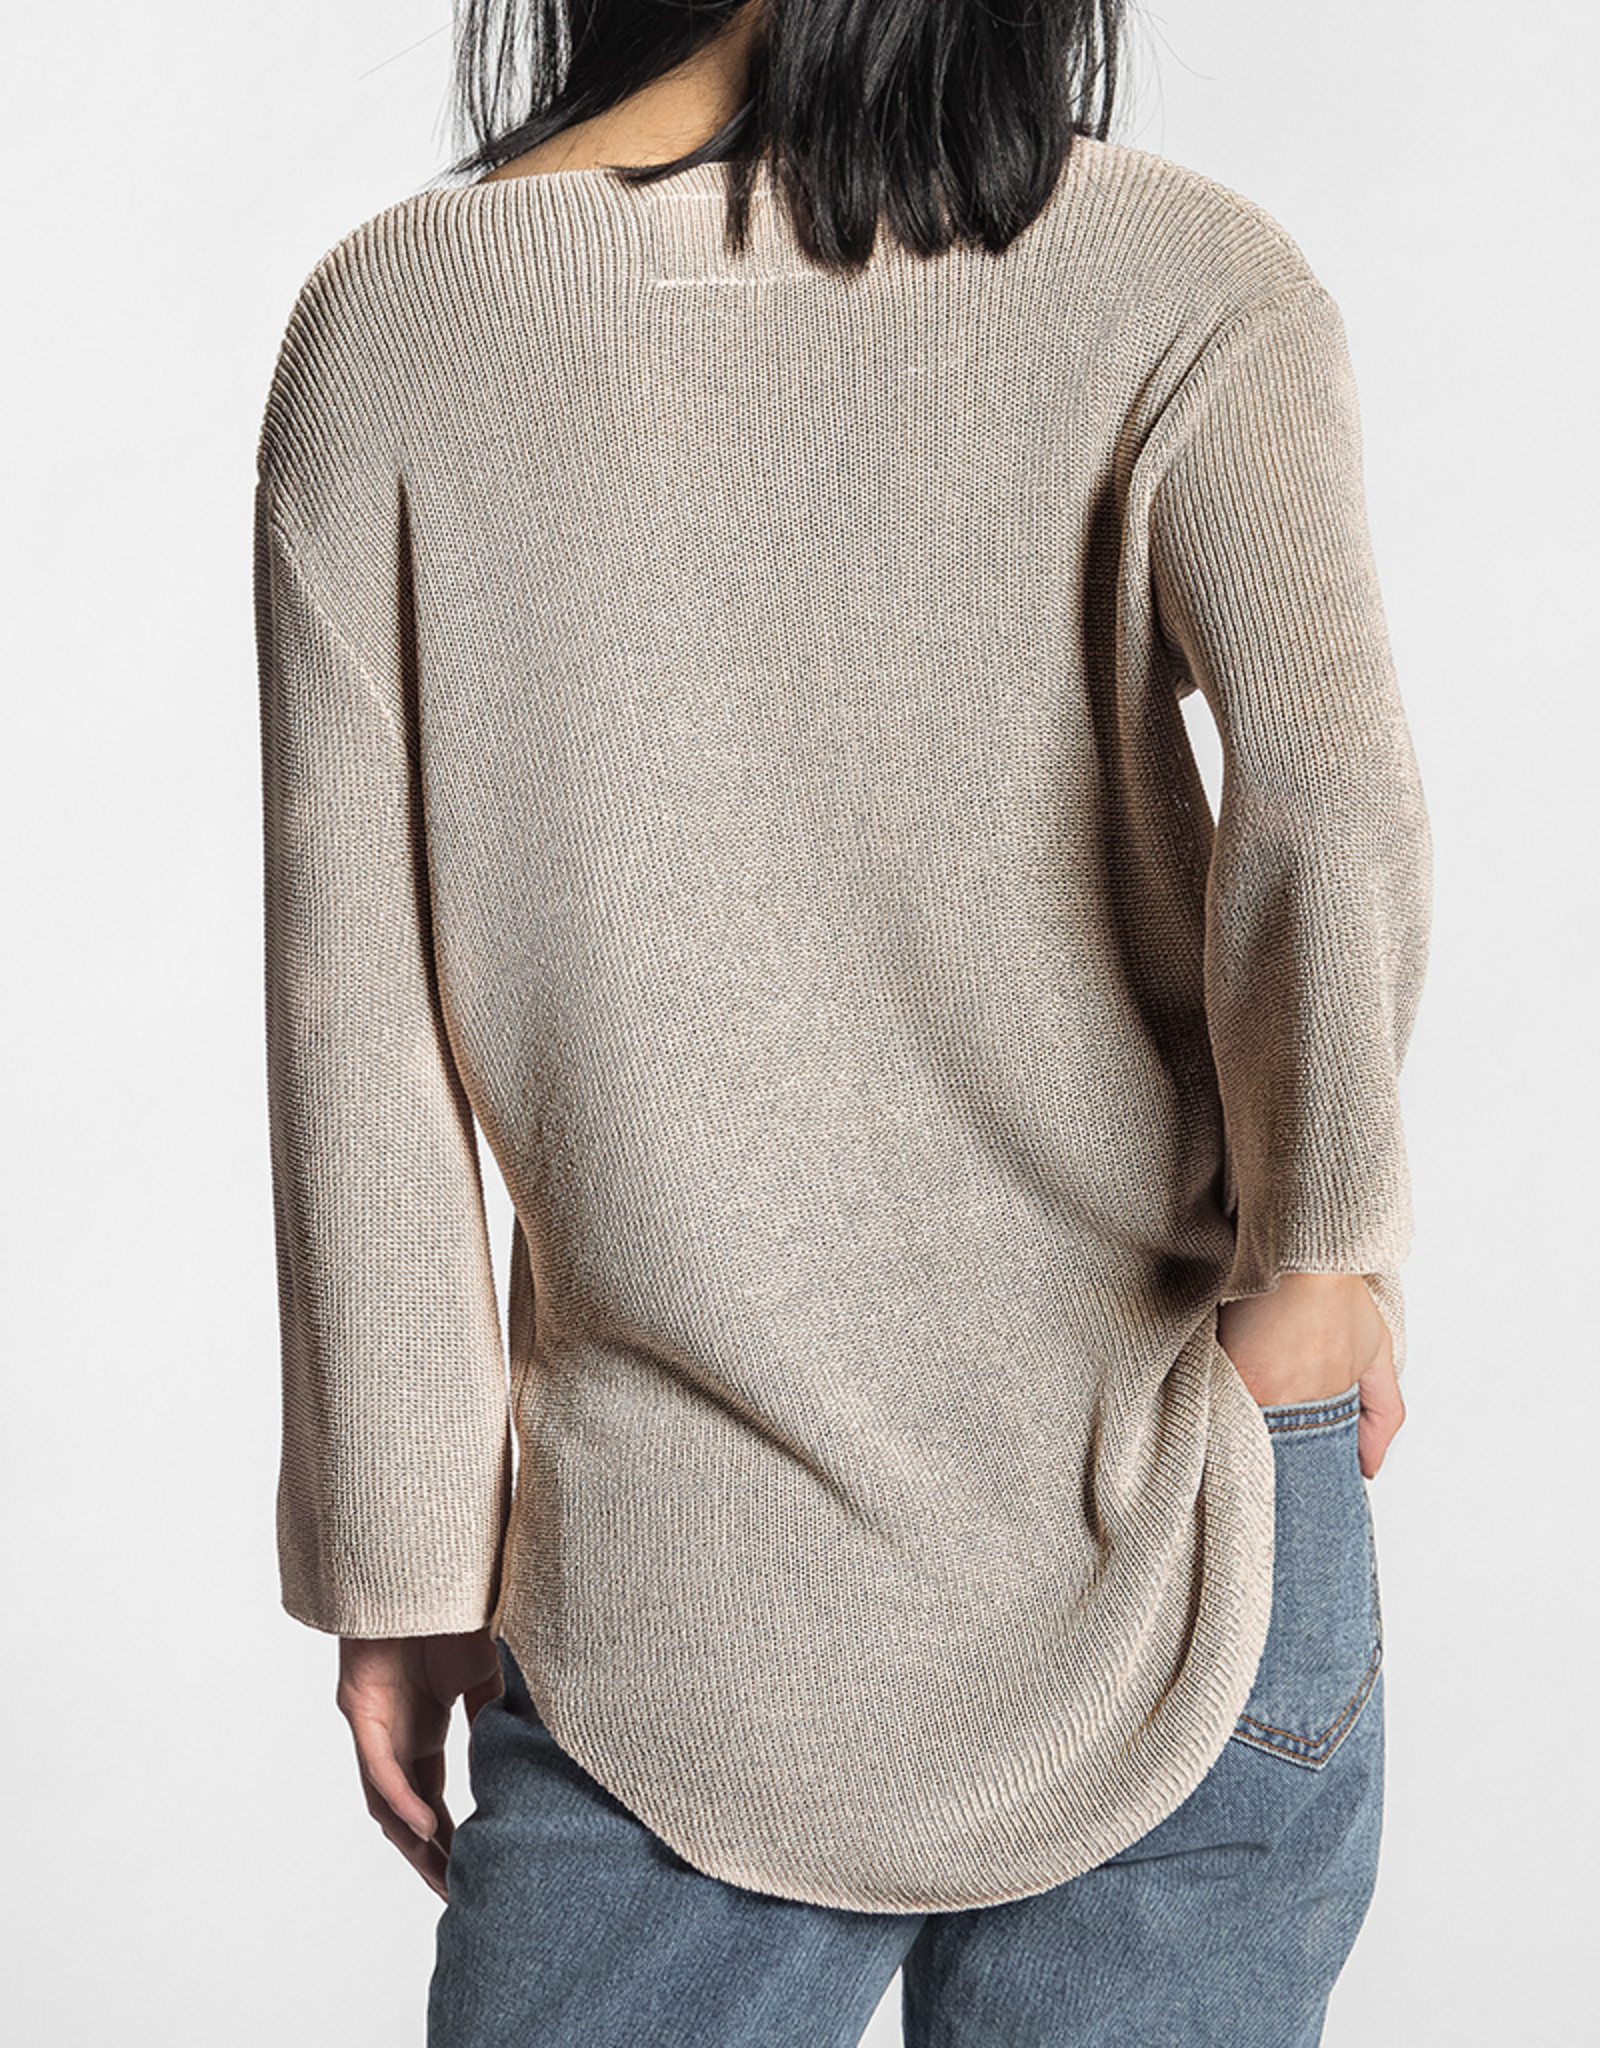 CLEARANCE: U-Neck Sweater Top